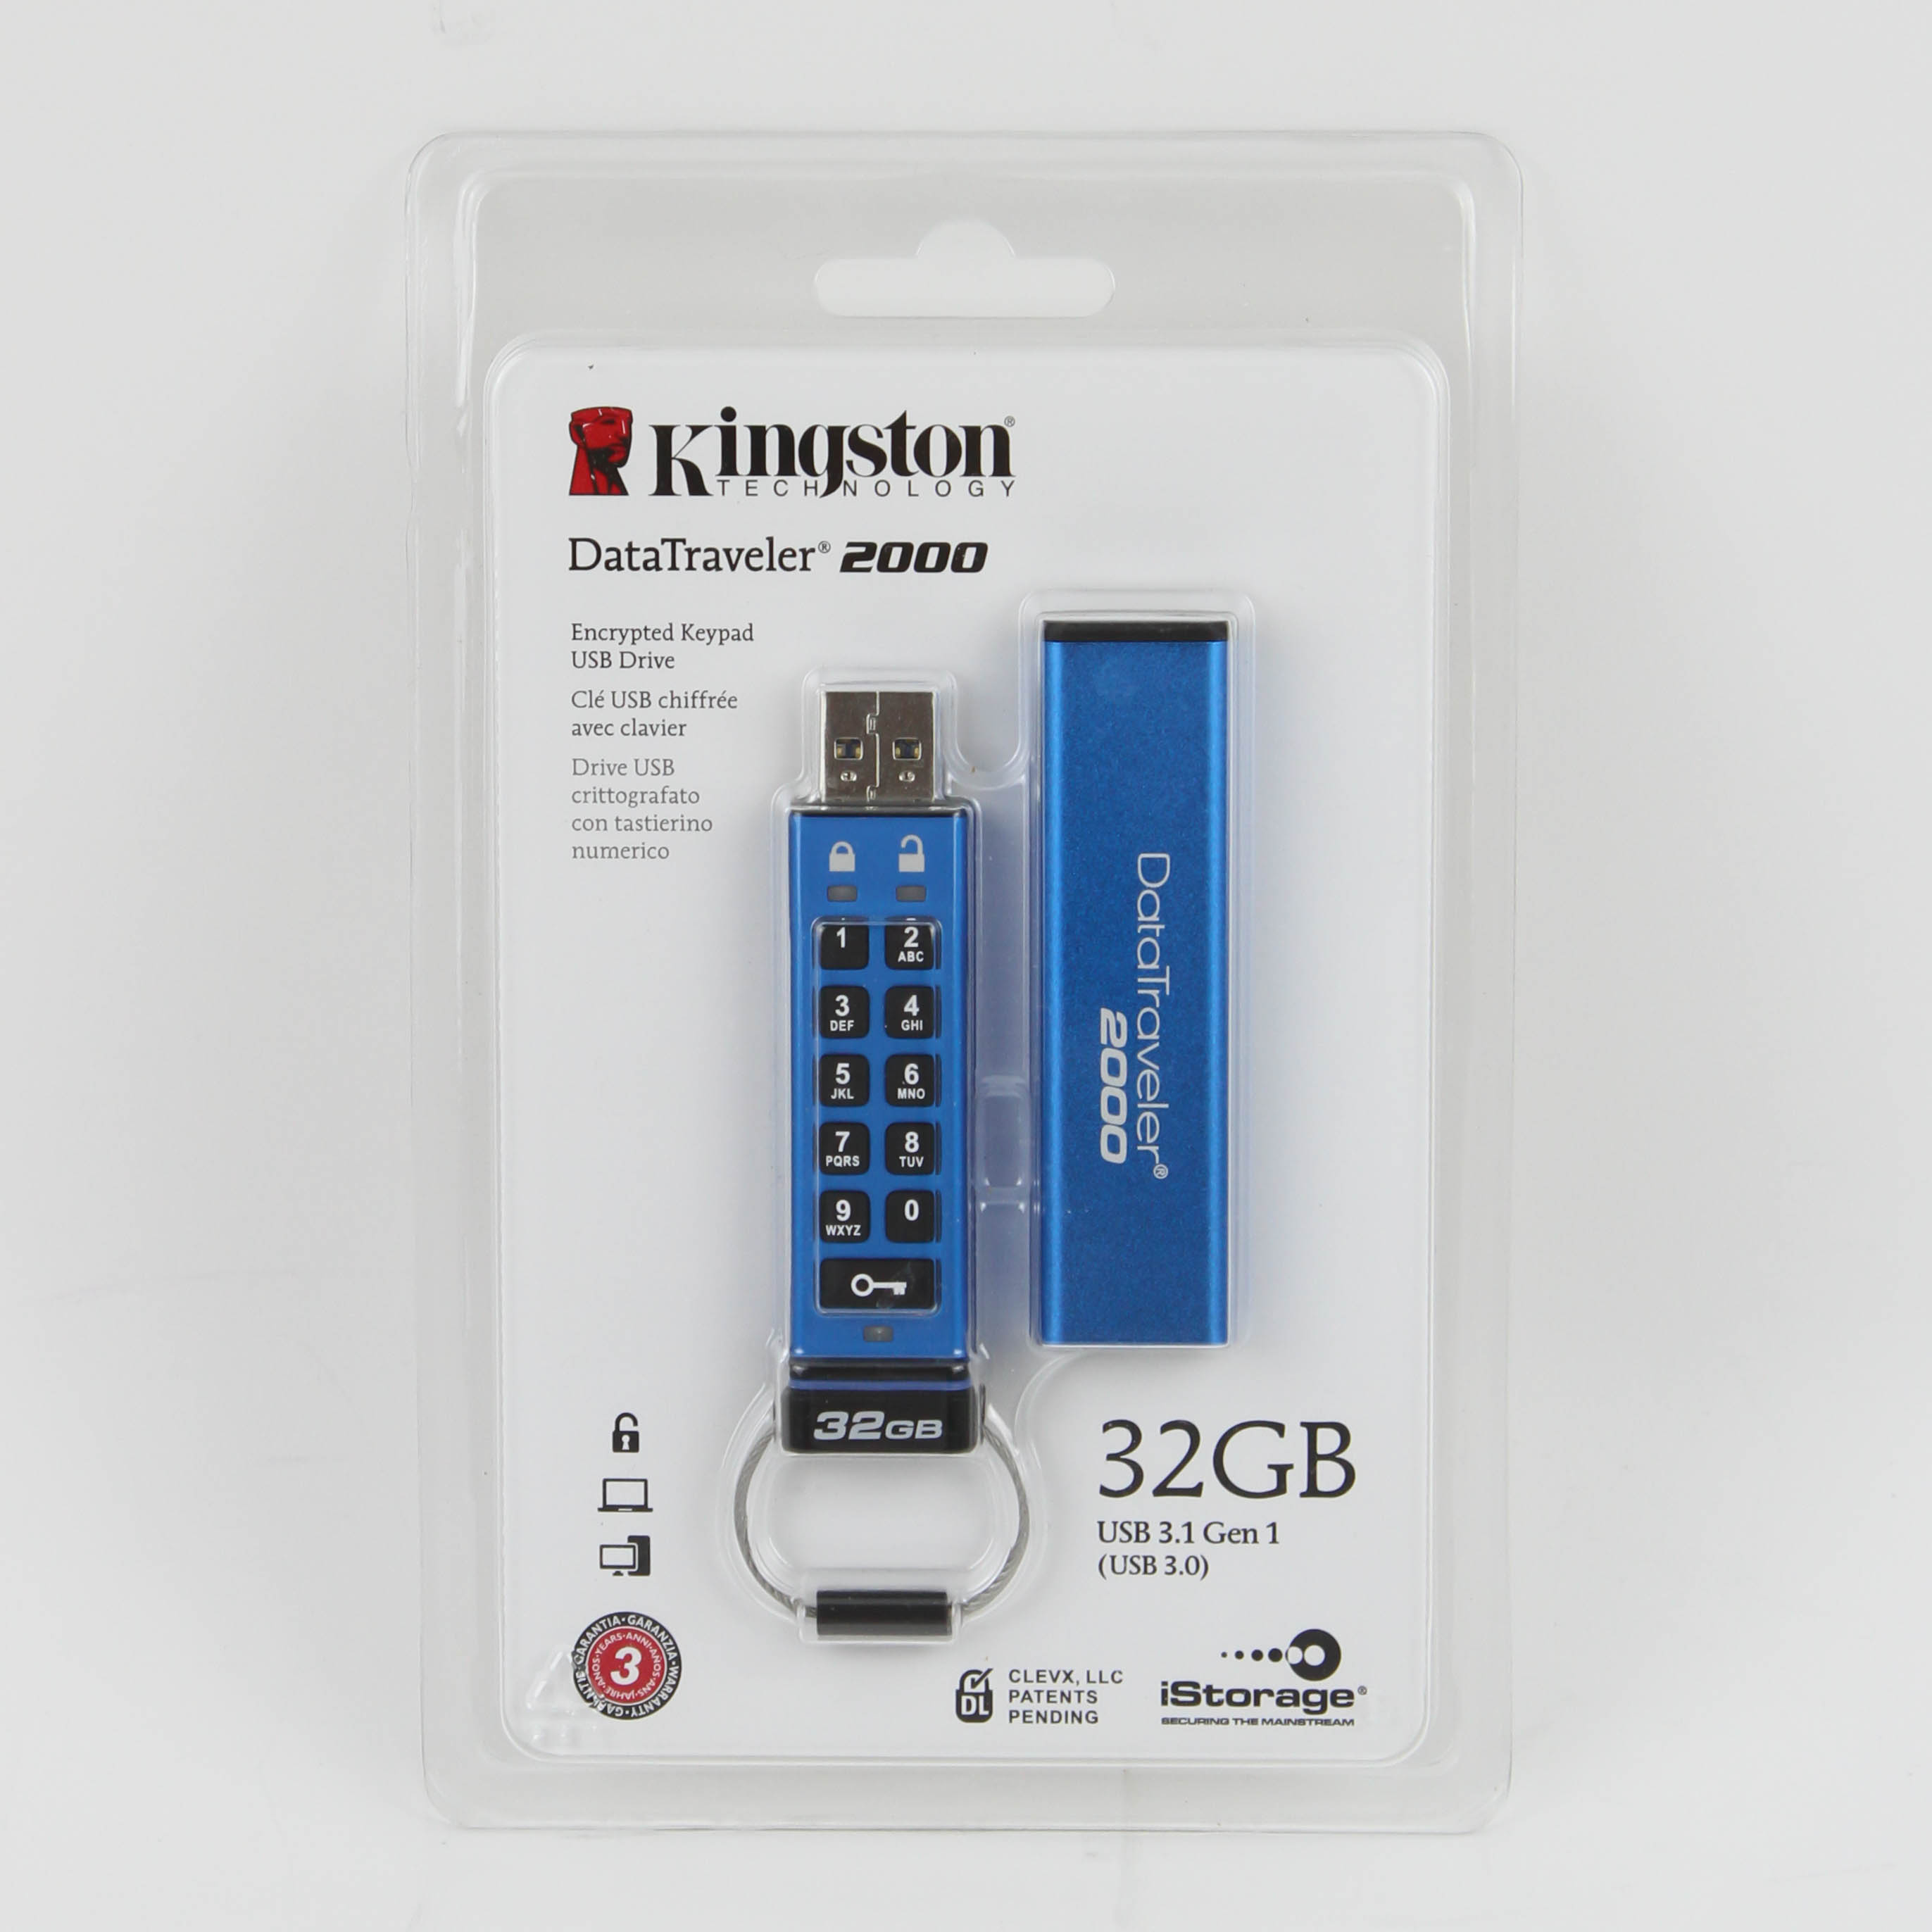 Clé USB Kingston 16GB Keypad USB3.0 DT2000 256bit AES Hard [3929217] à  114.54€ - Generation Net